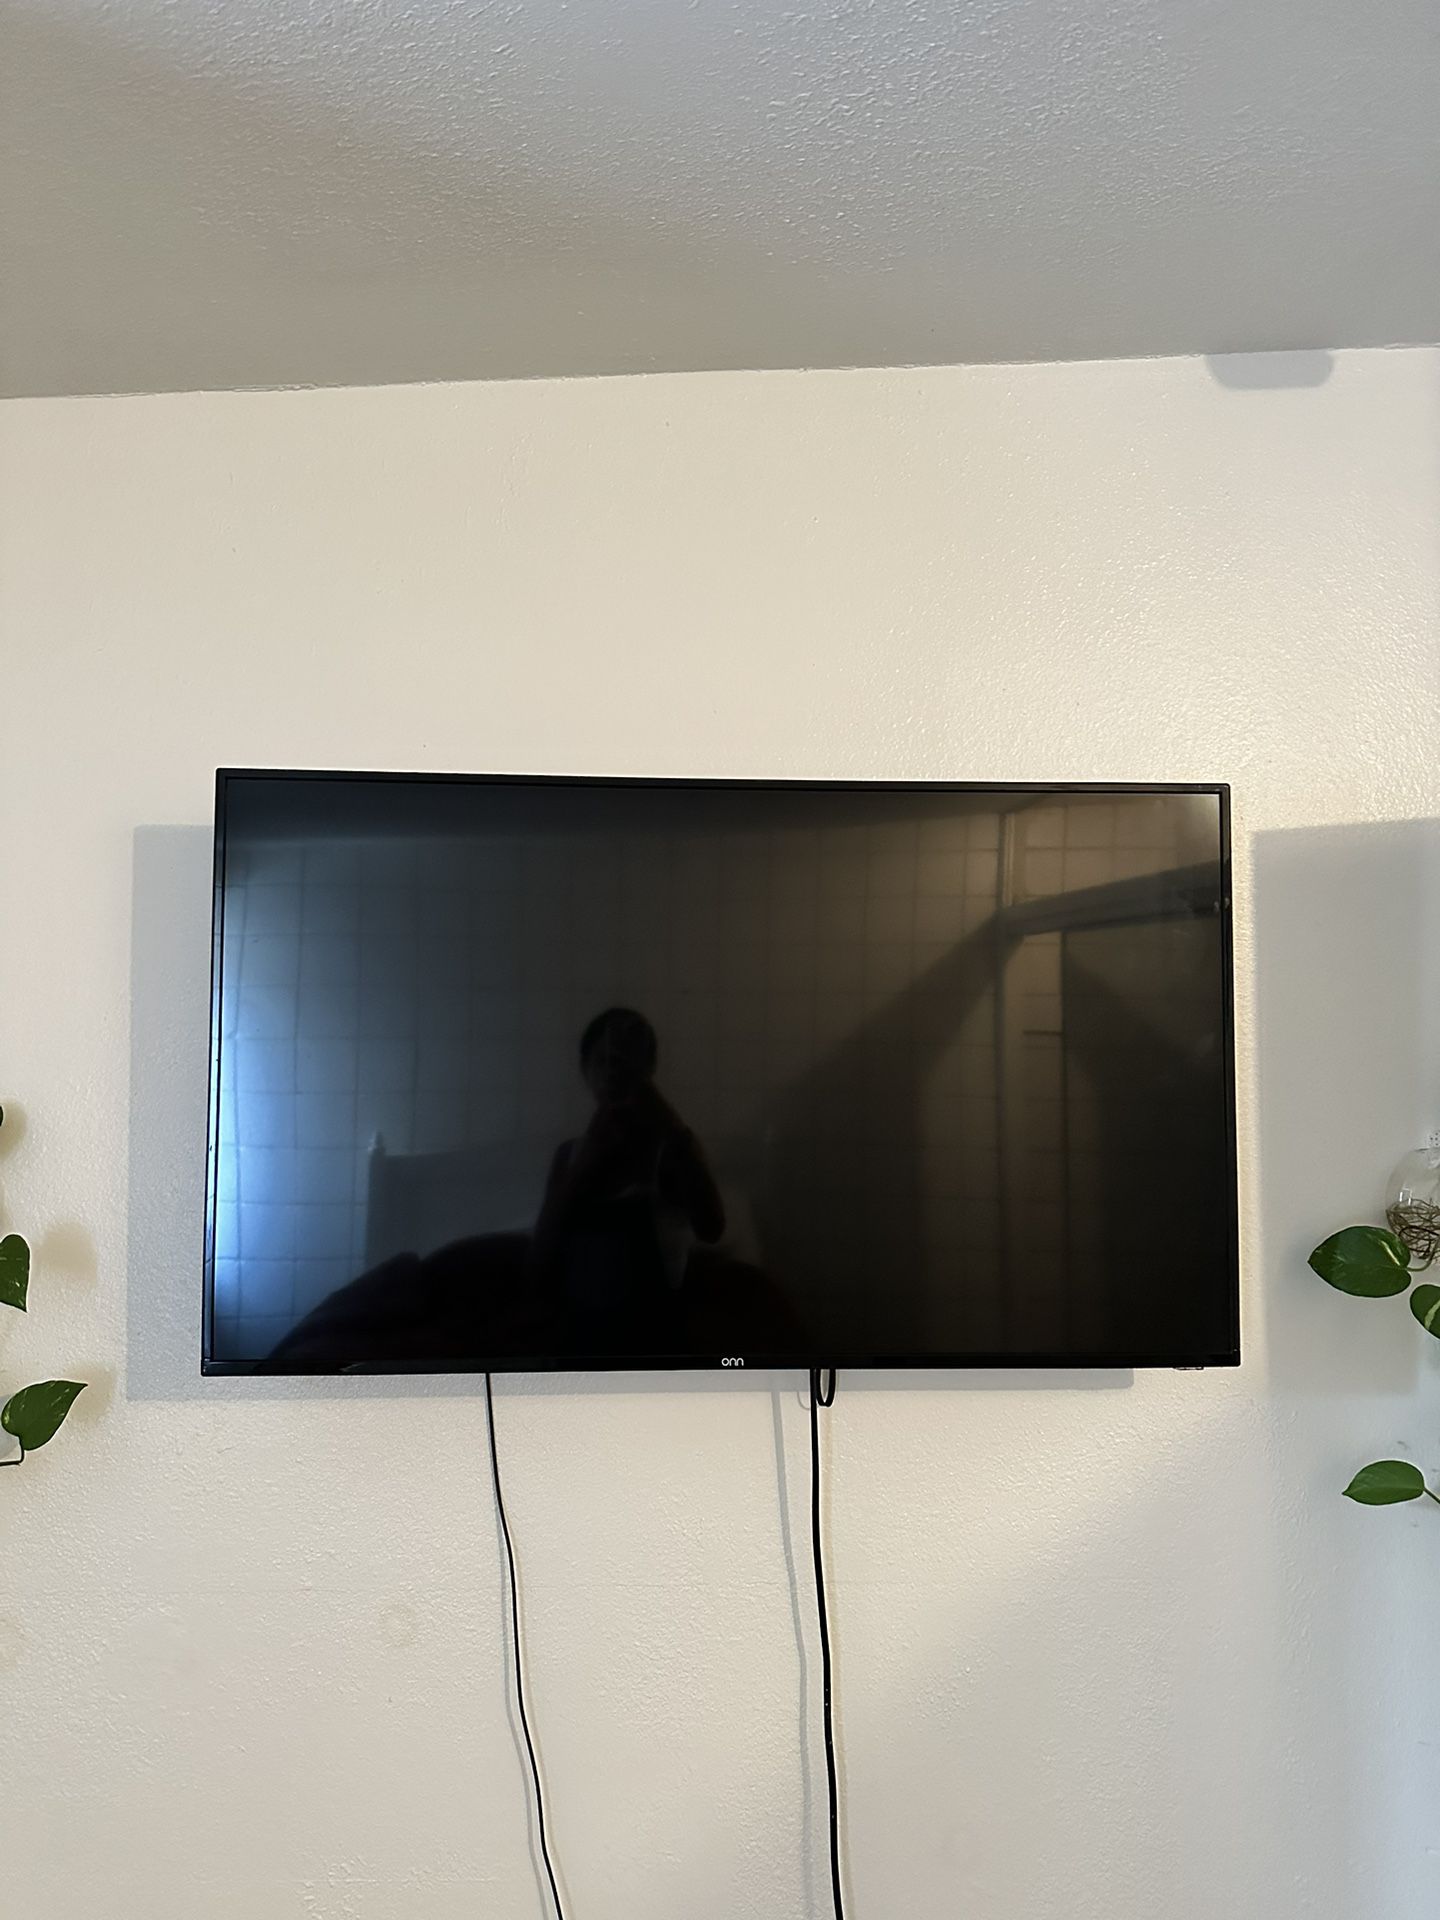 38in Screen TV- Wall Mount & Firestick Included 